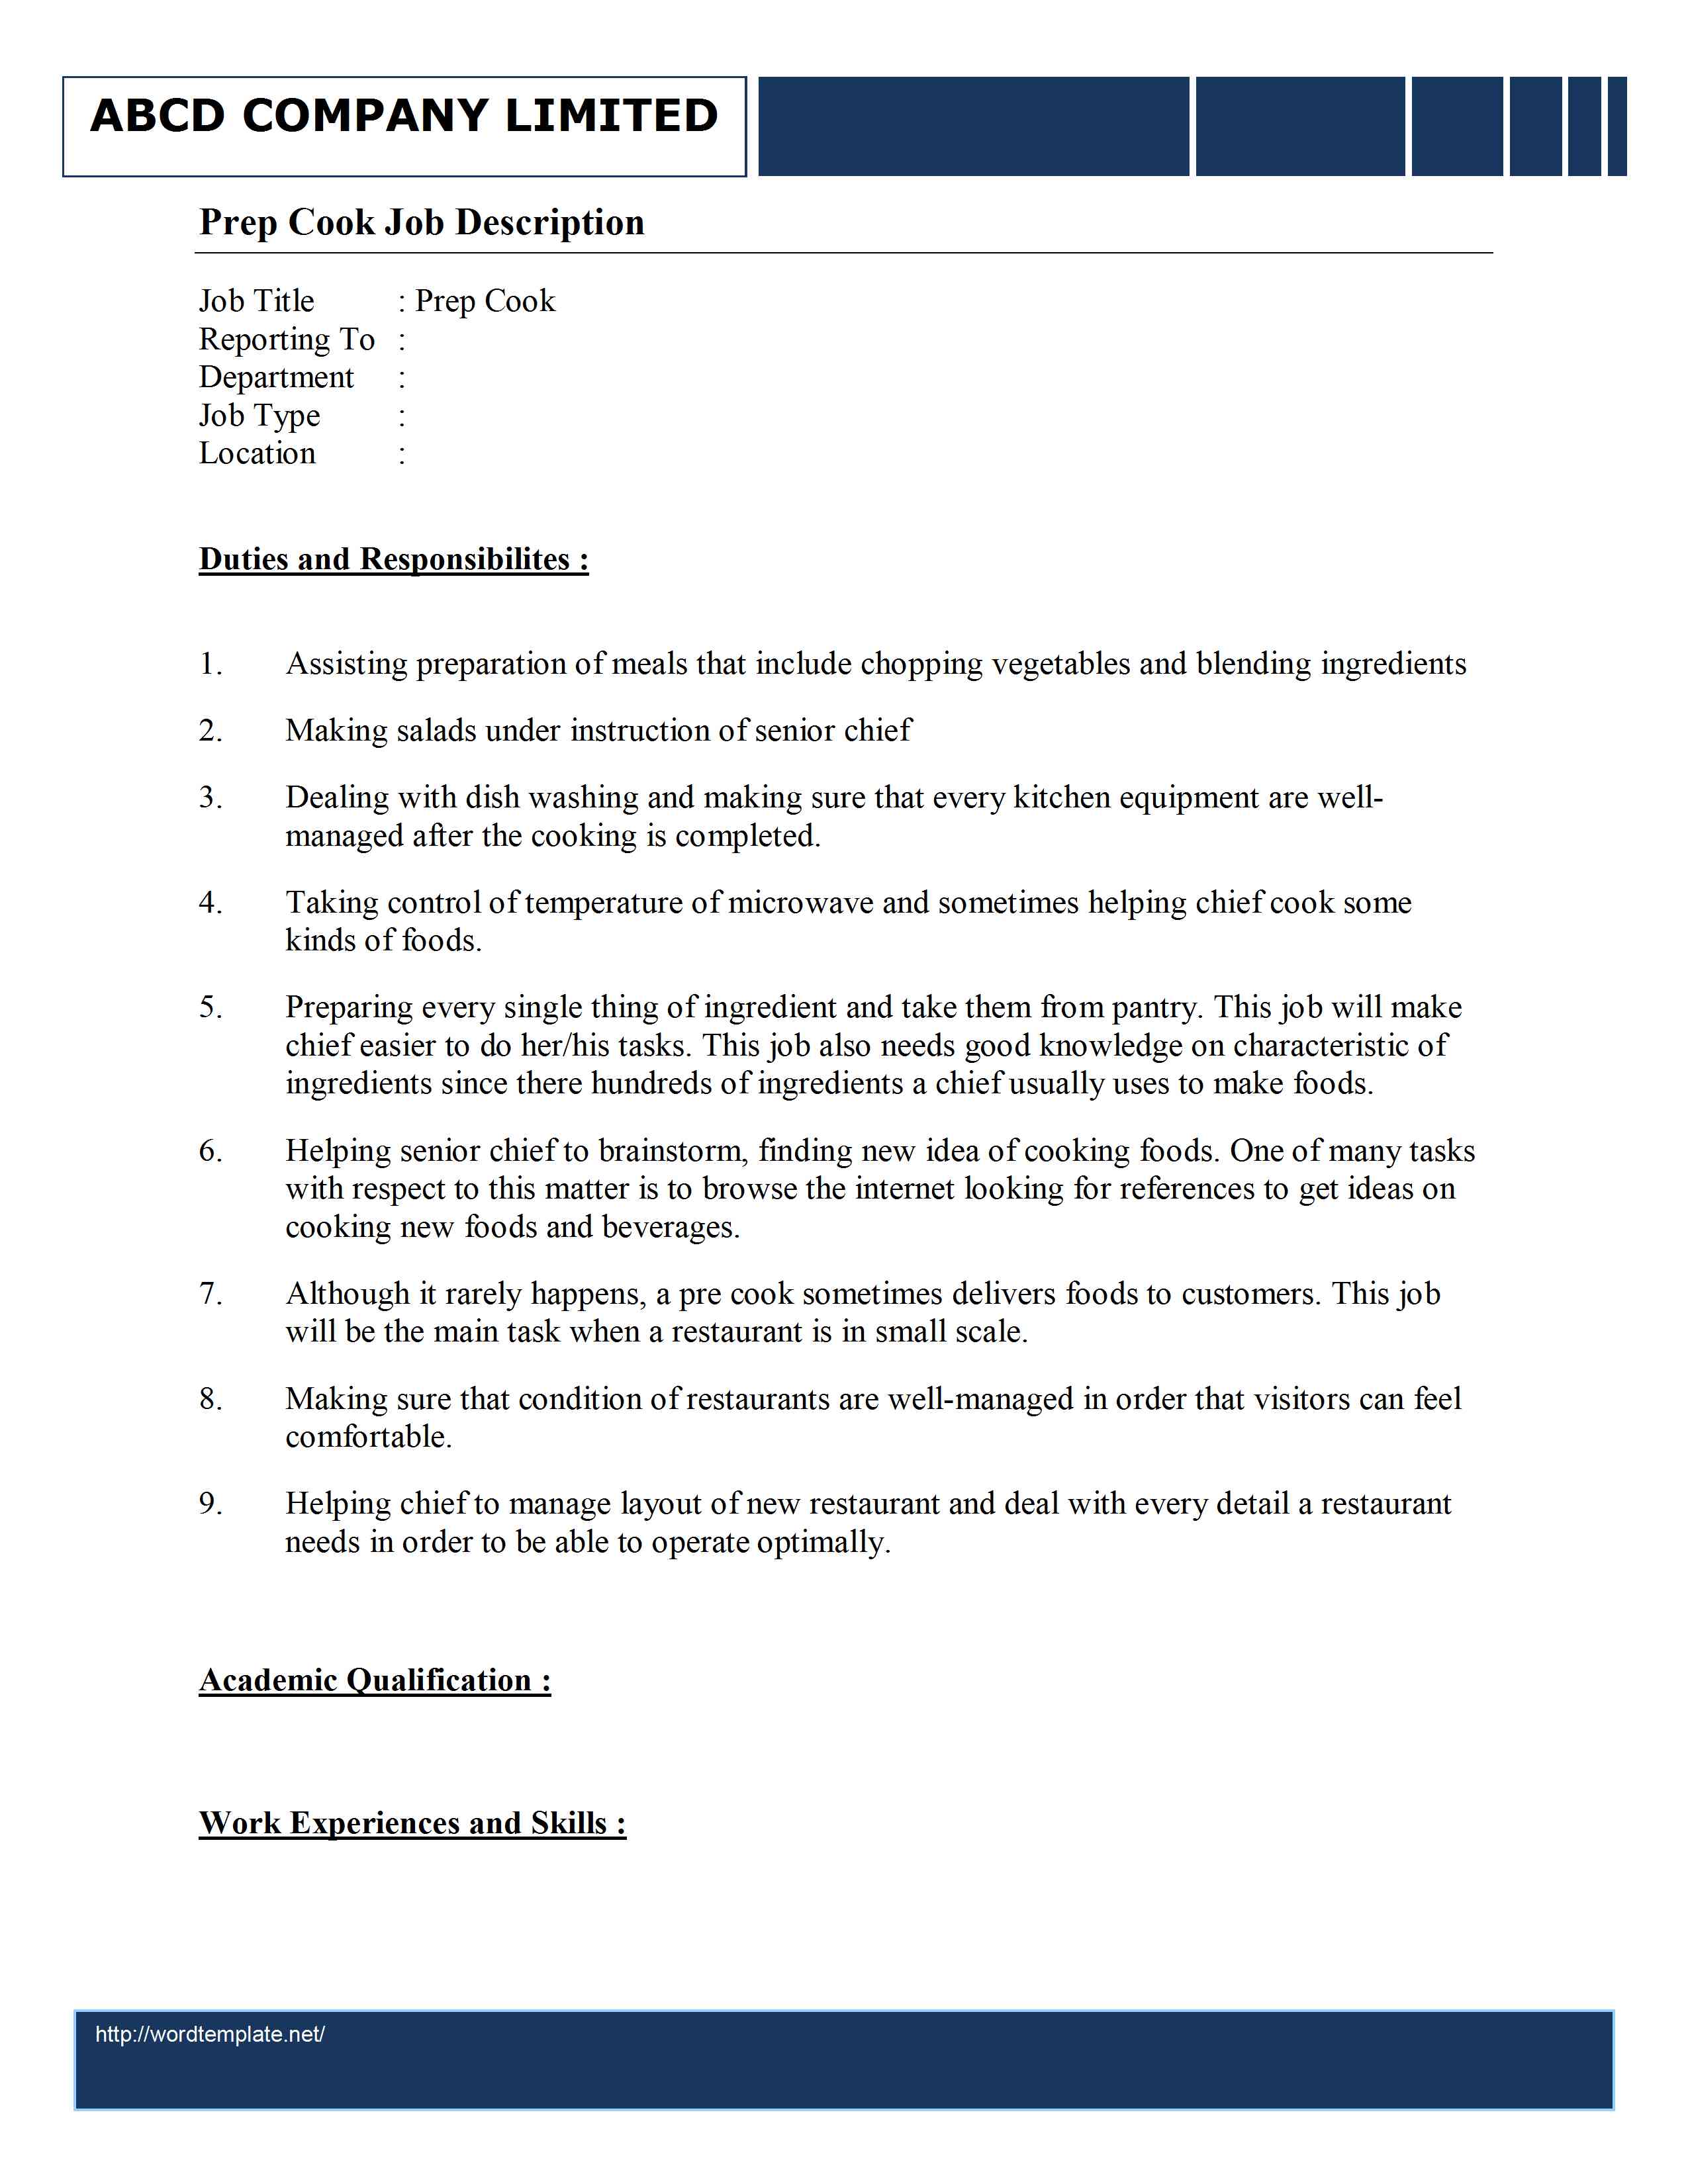 Grill cook job description for resume